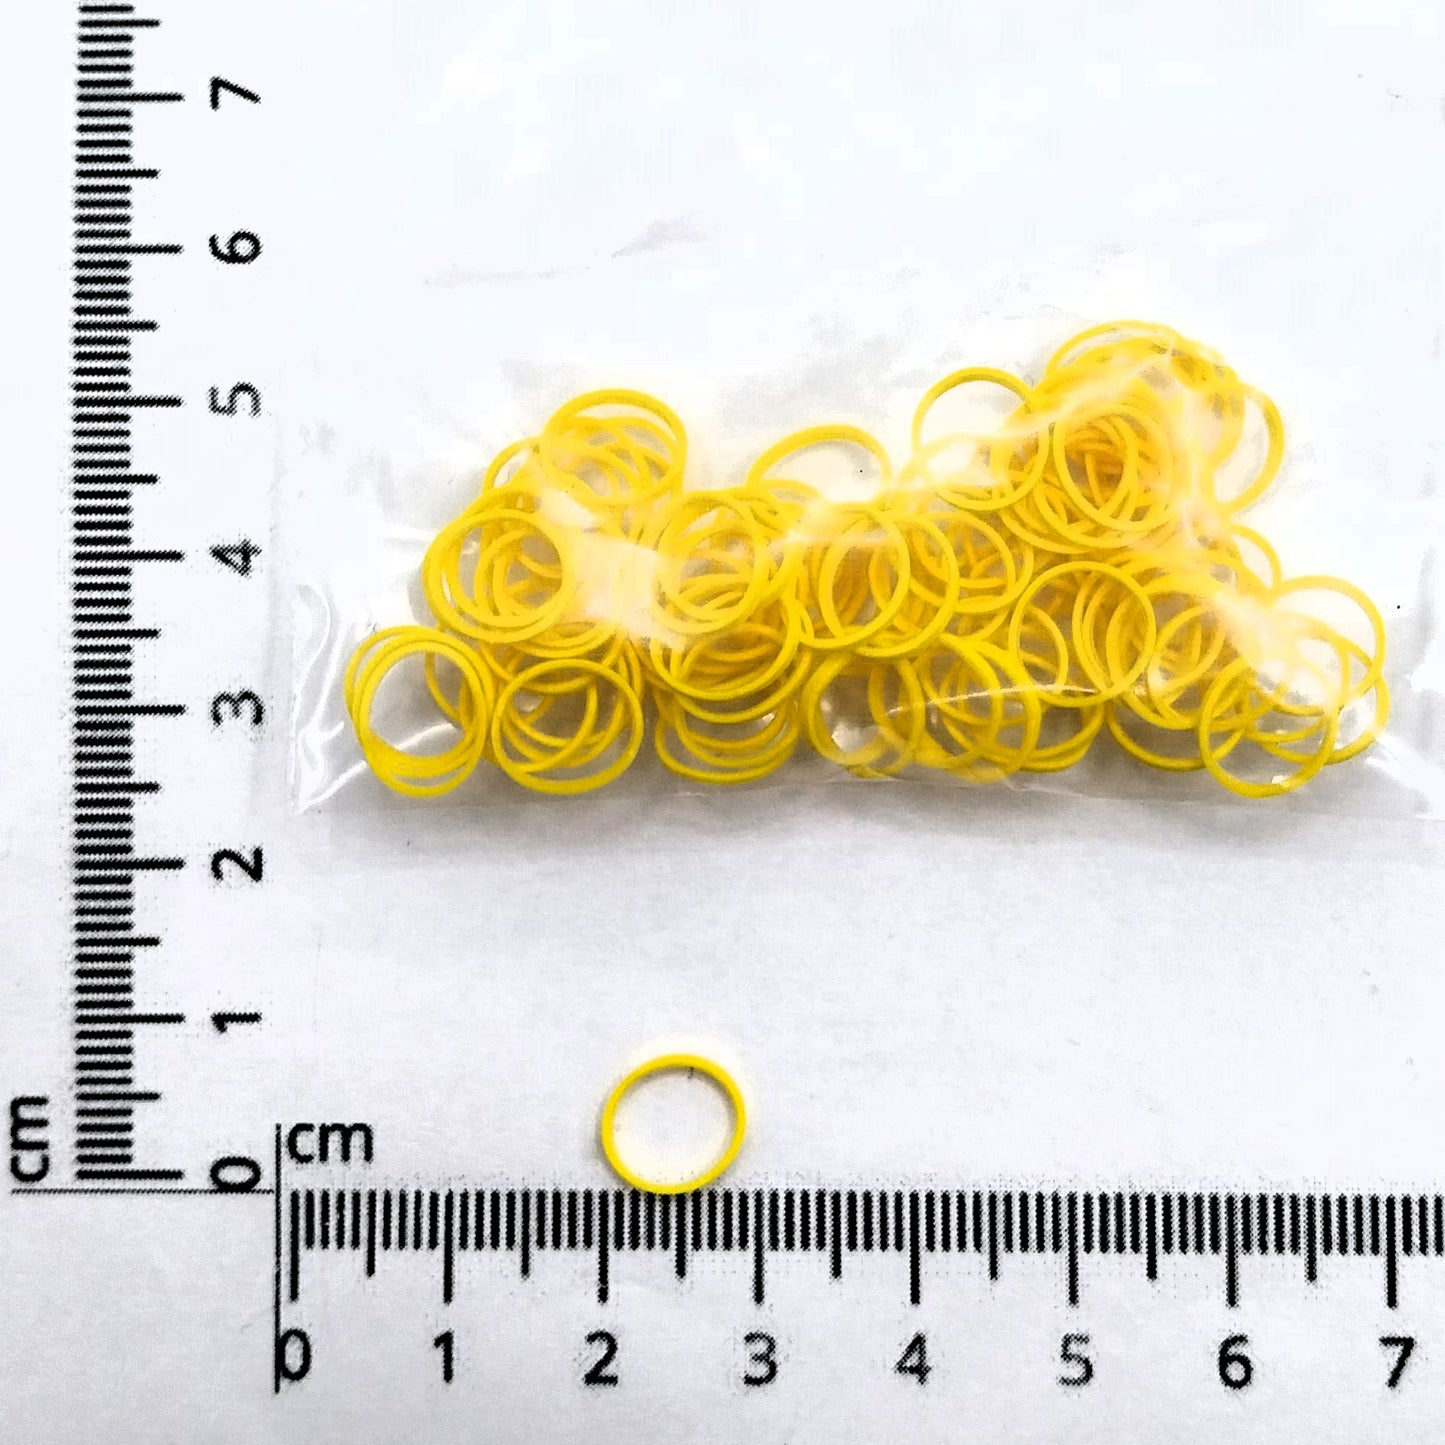 Latex Bands, Top Knot Bands, Hundehaargummis ca. 8mm Durchmesser, verschiedene Farben je 100 Stück